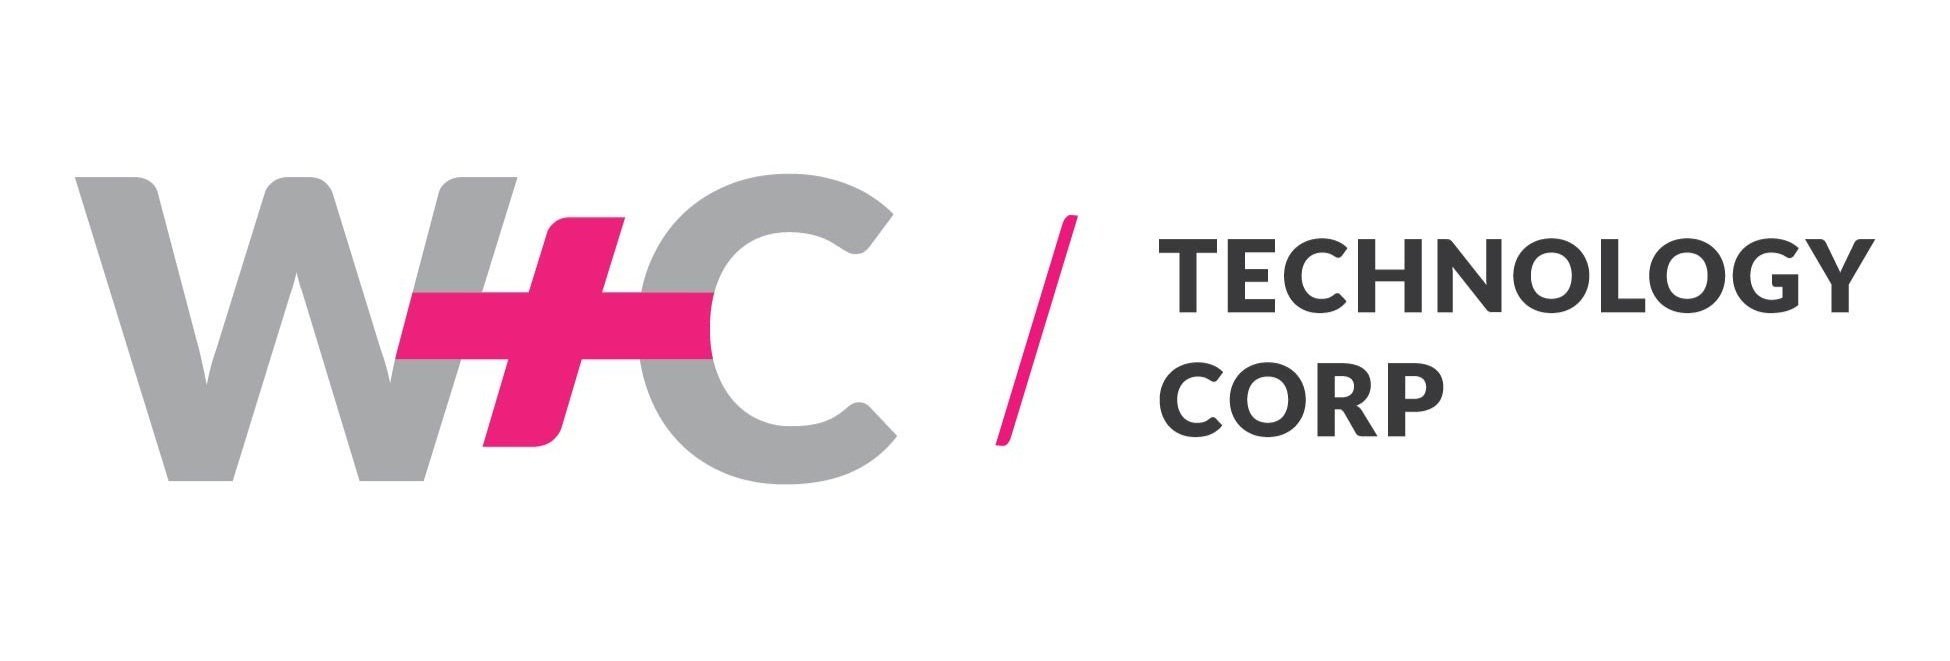 WtC_TechnologyCorp_Logo_Fin_ALT.jpg